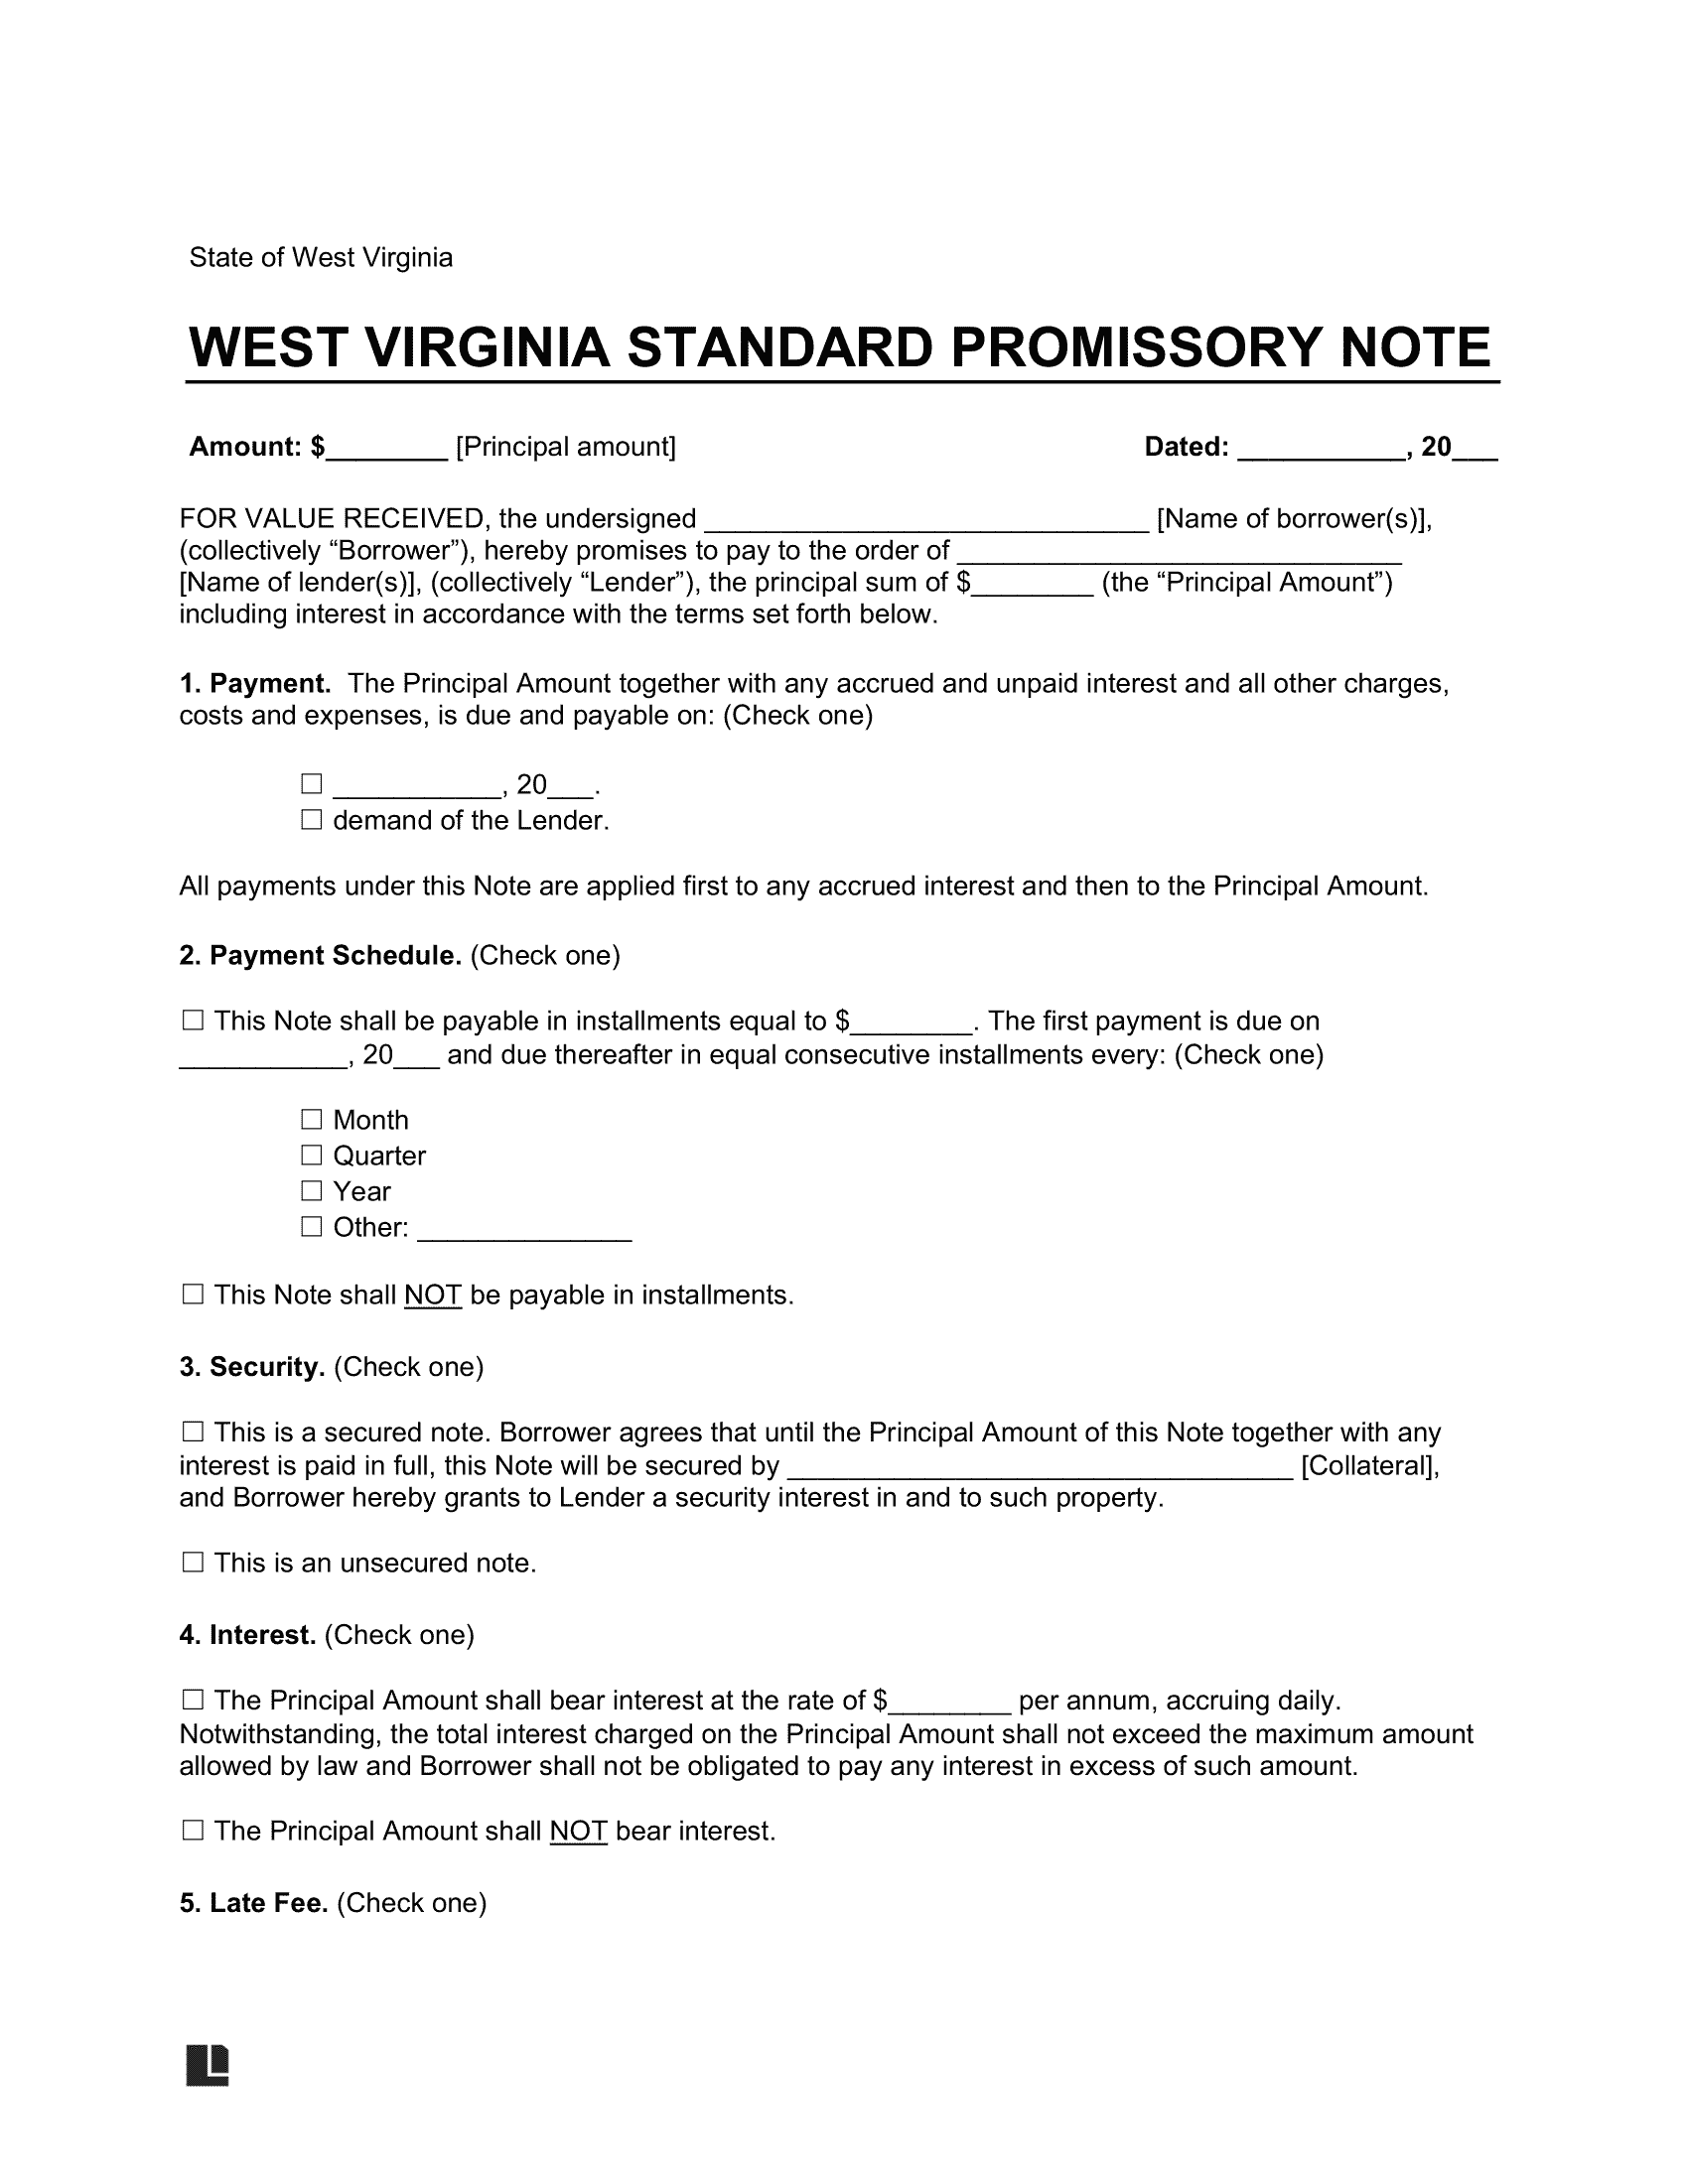 West Virginia Standard Promissory Note Template